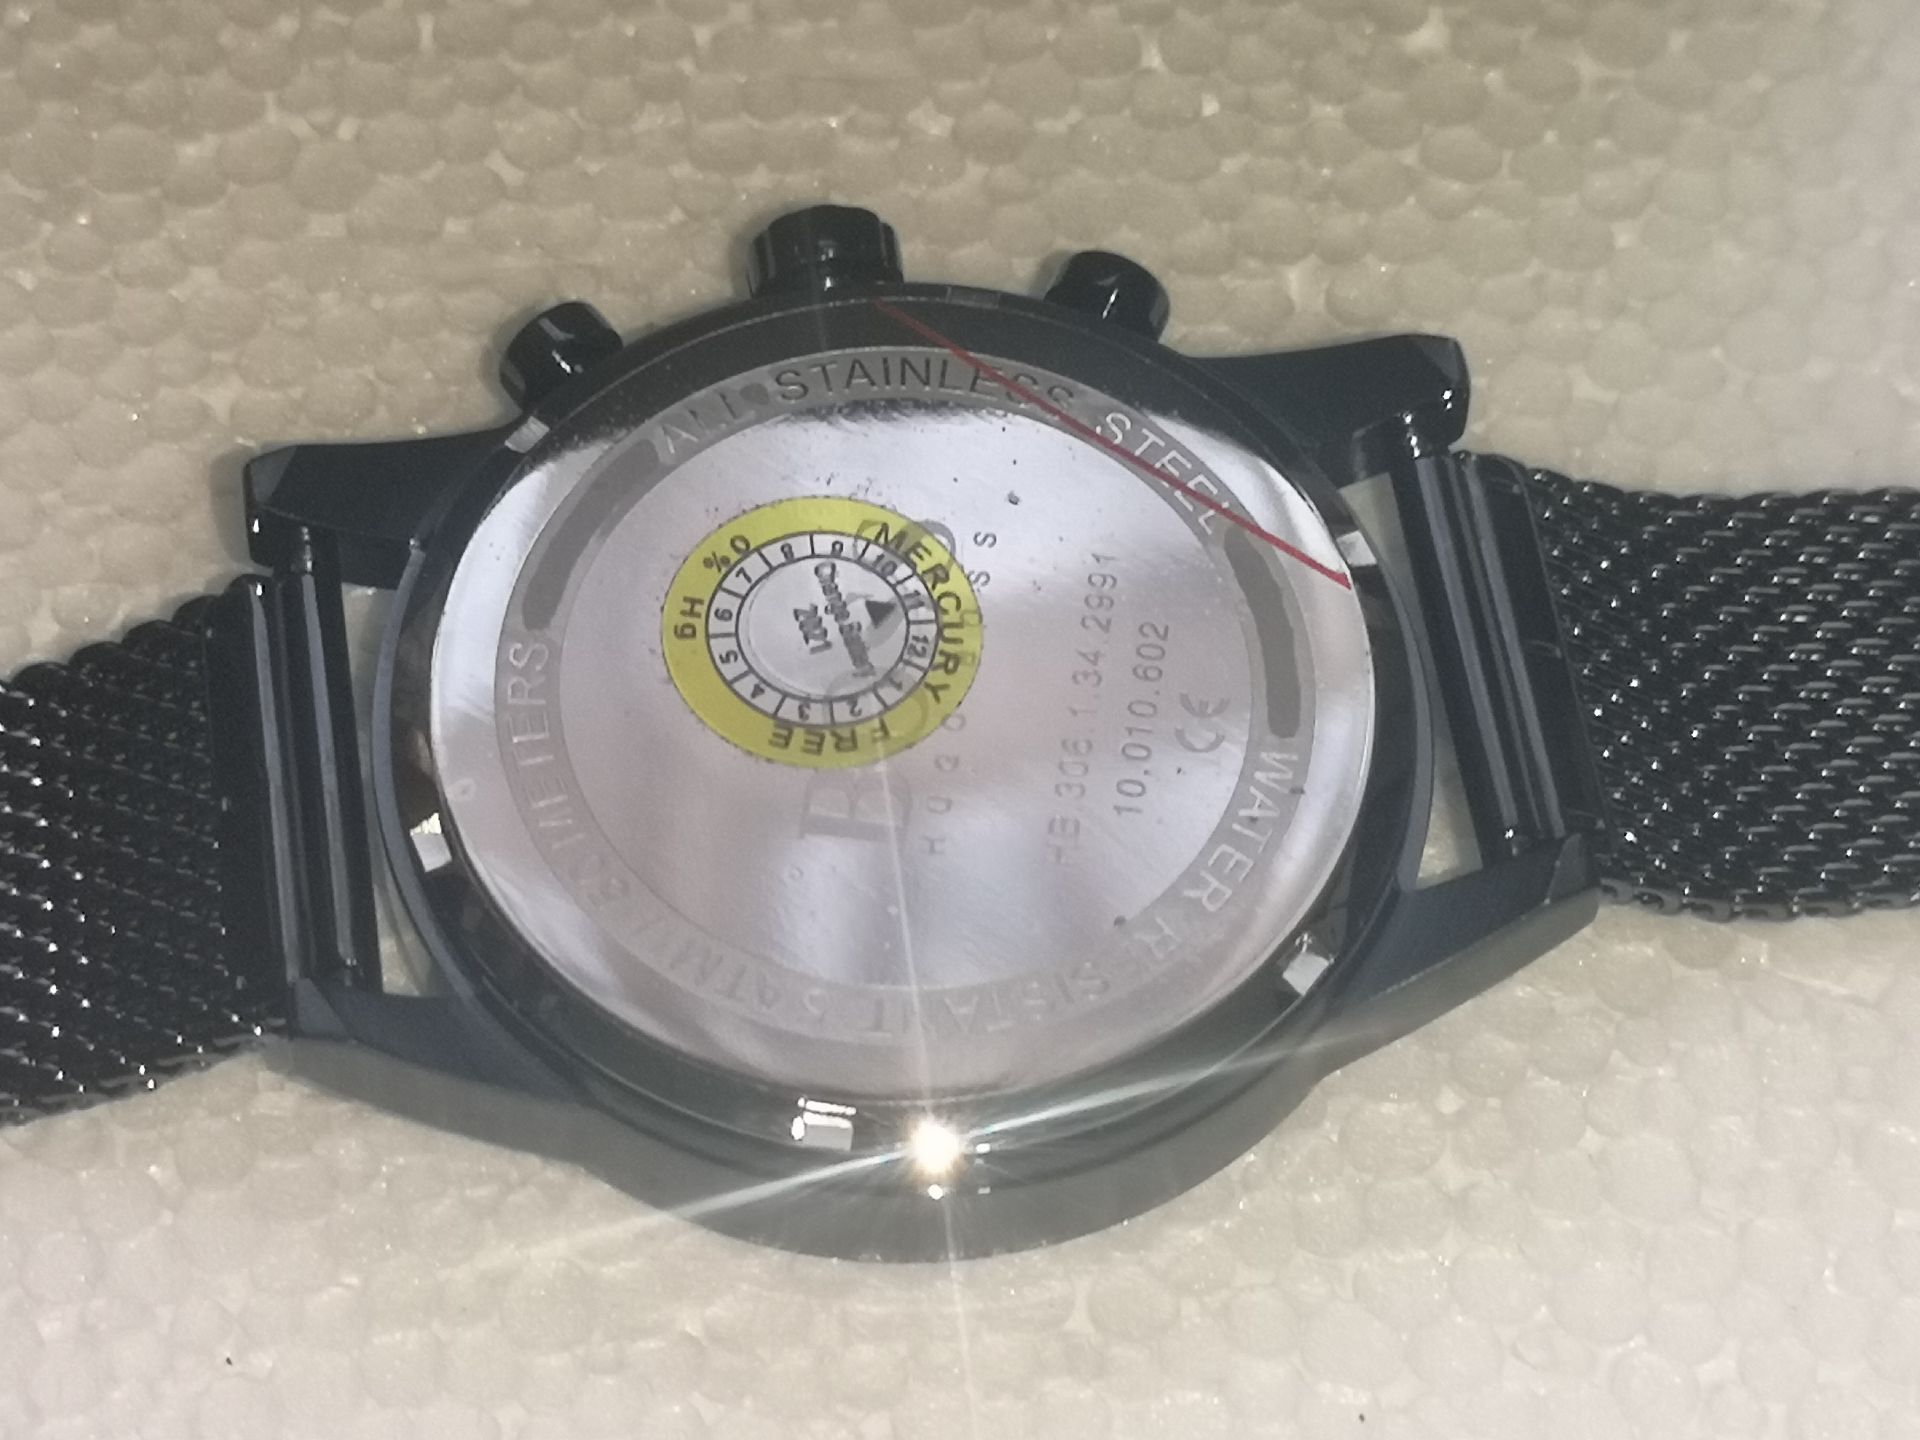 Hugo Boss Men's Chronograph Quartz With Stainless Steel Bracelet Watch 1513538 - Image 7 of 8